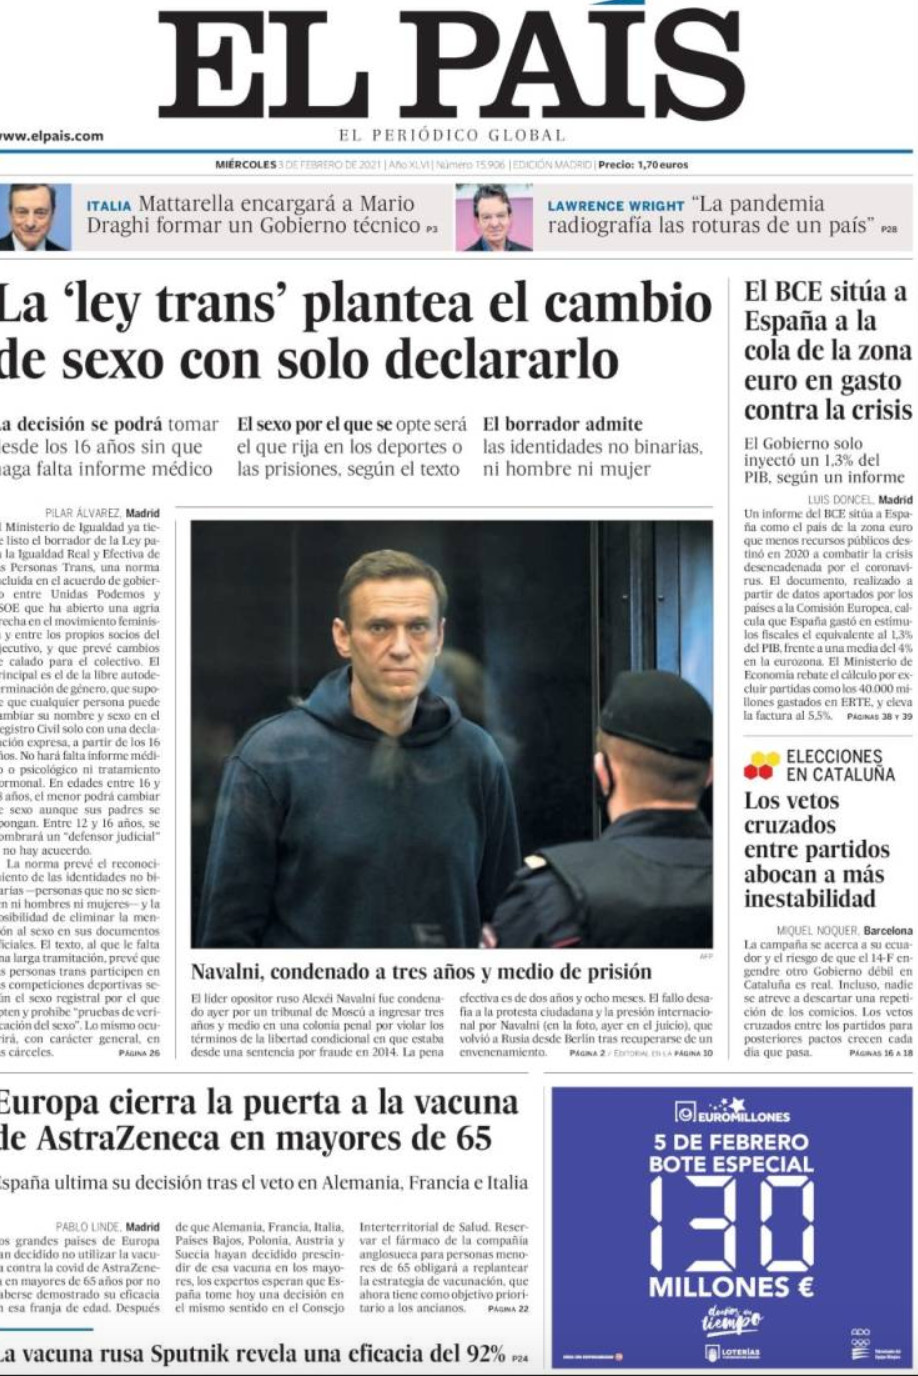 Portada de 'El País' del 3 de febrero de 2021 / KIOSKO.NET